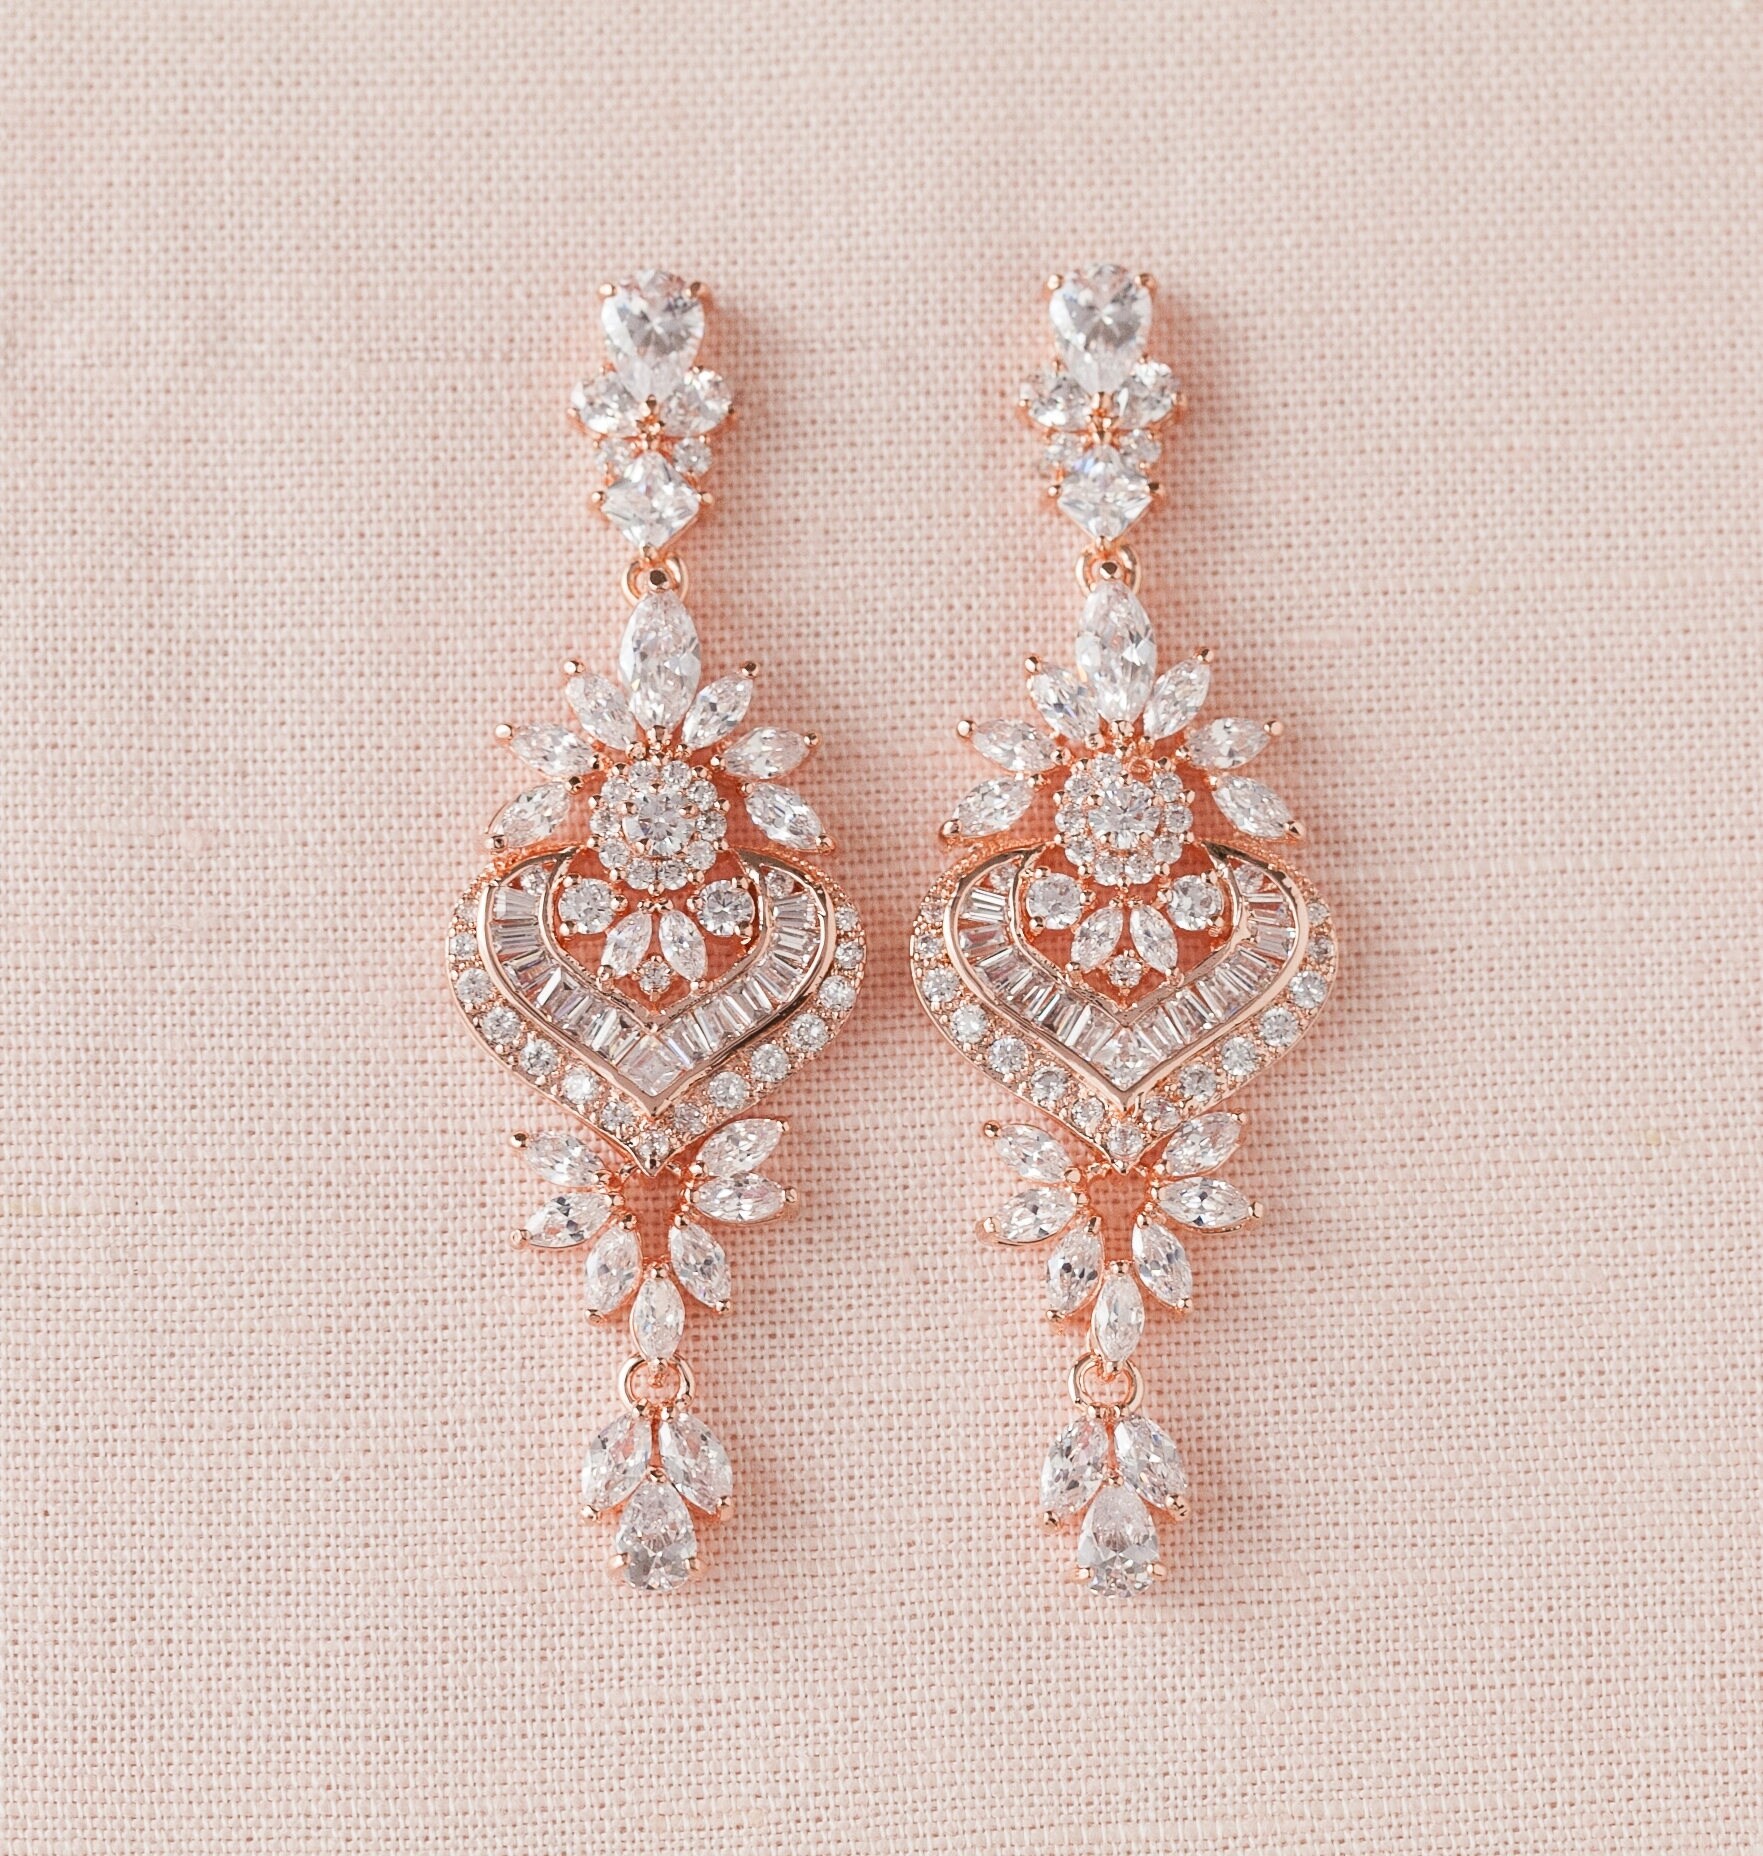 Crystal Bridal Earrings Statement Wedding Earrings Long | Etsy